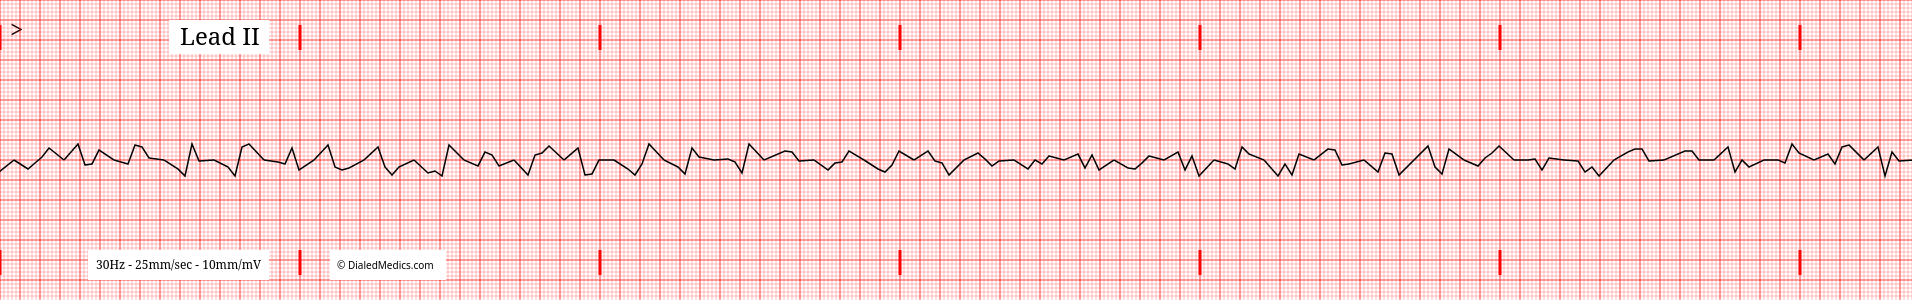 A typical VF EKG tracing.